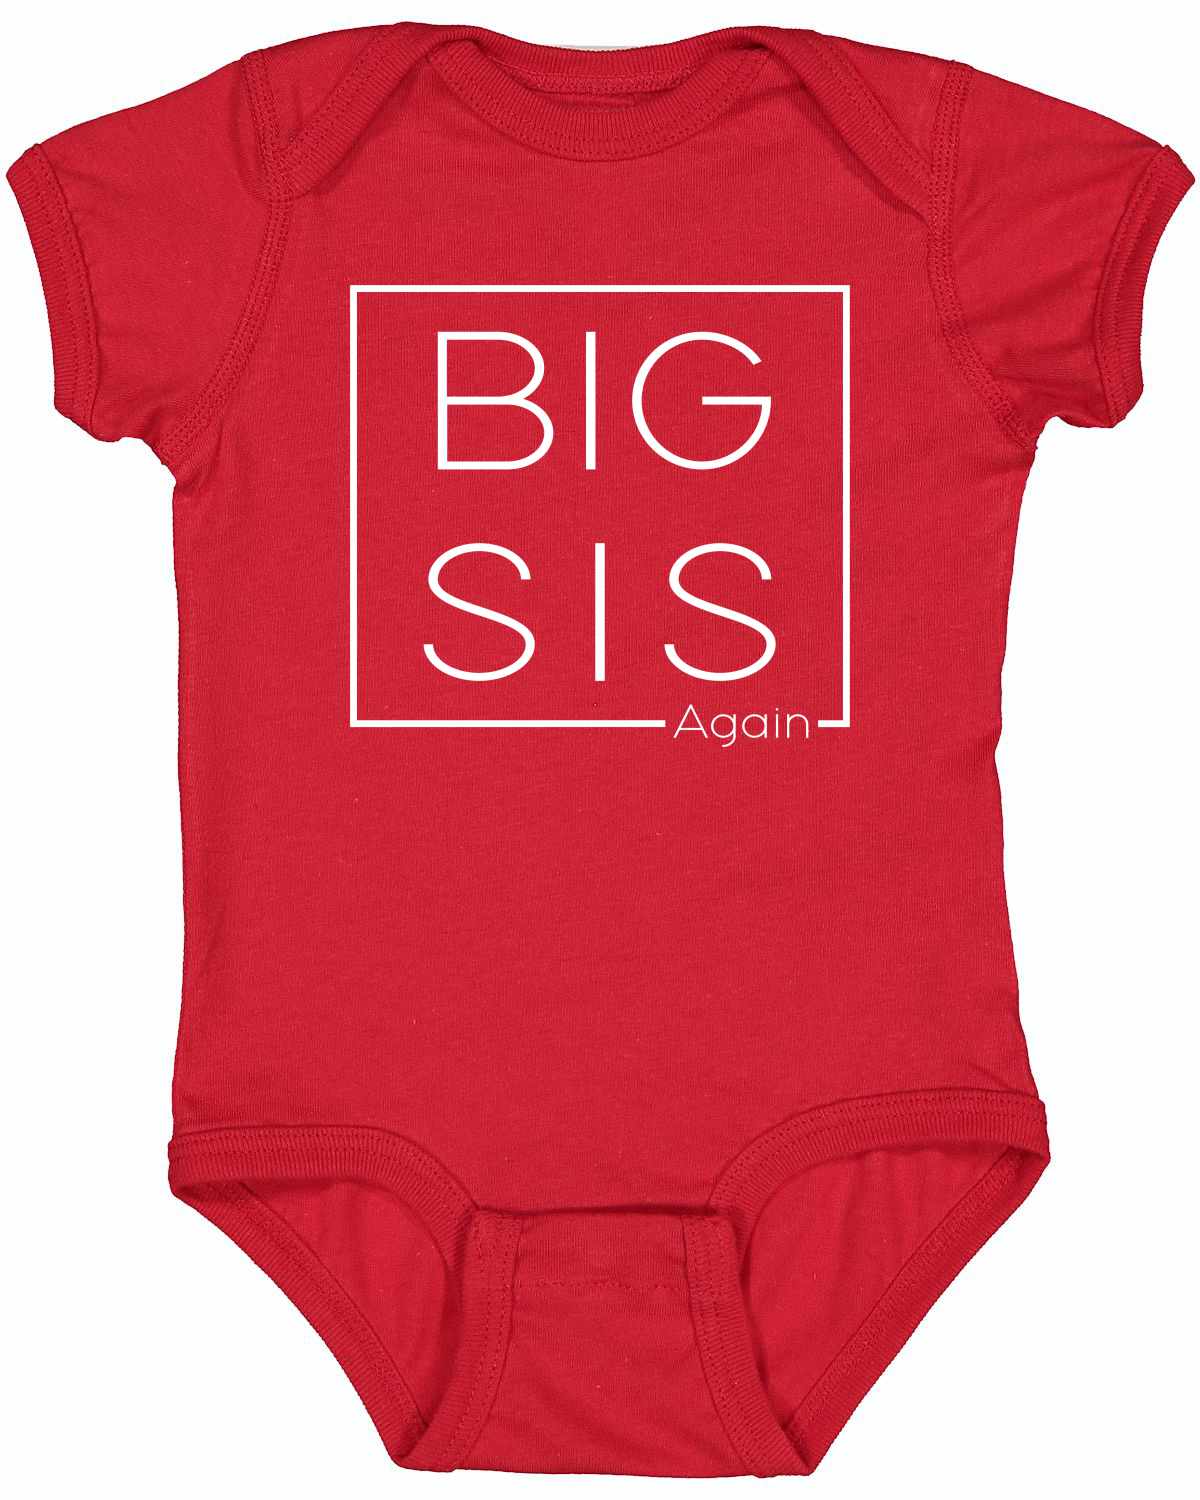 Big Sis Again - Big Sister Boxed on Infant BodySuit (#1312-10)